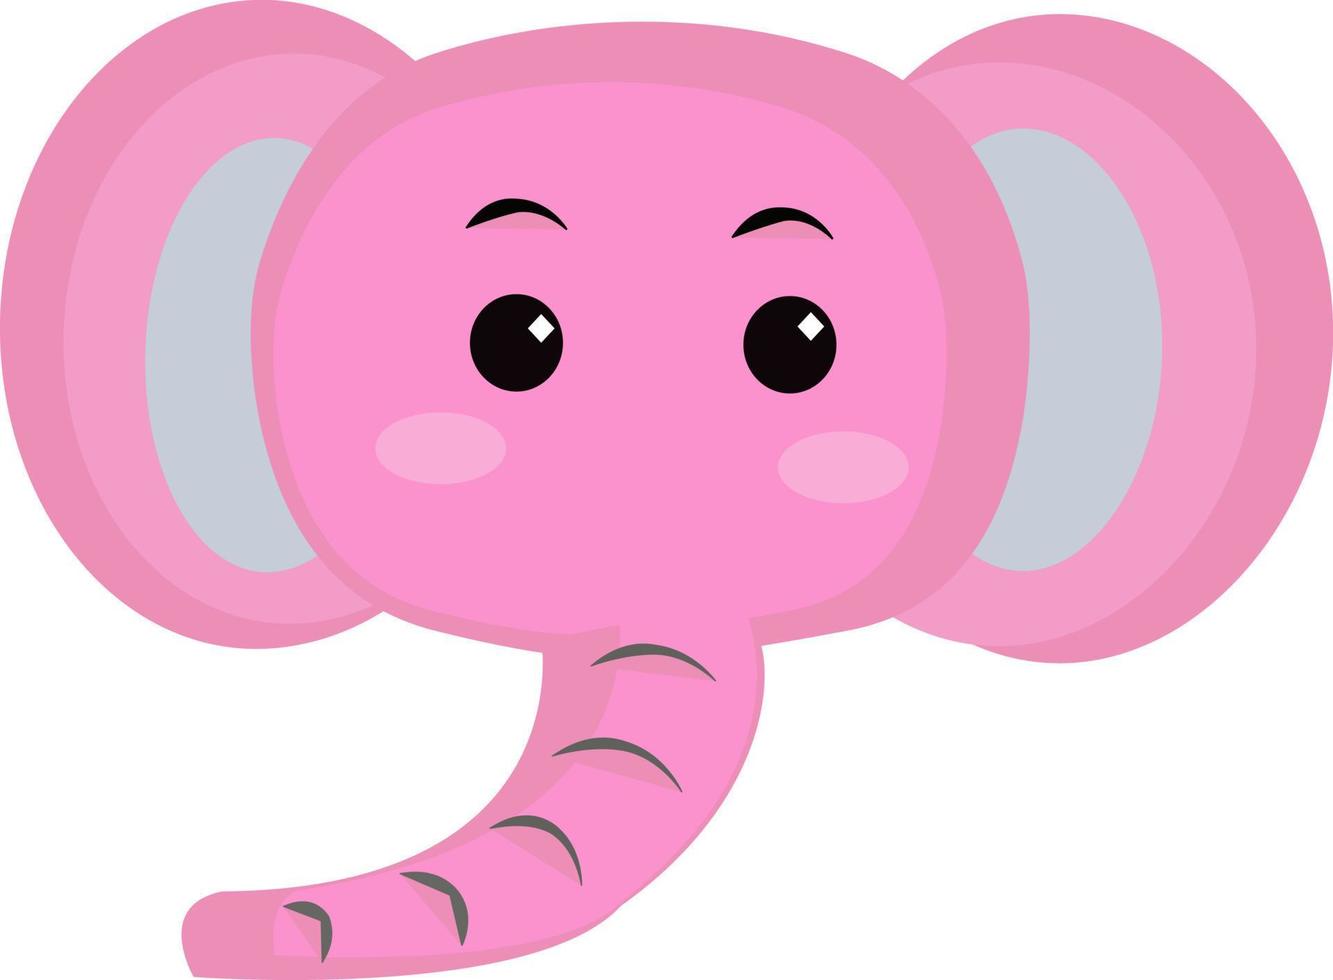 Pink elephant, illustration, vector on white background